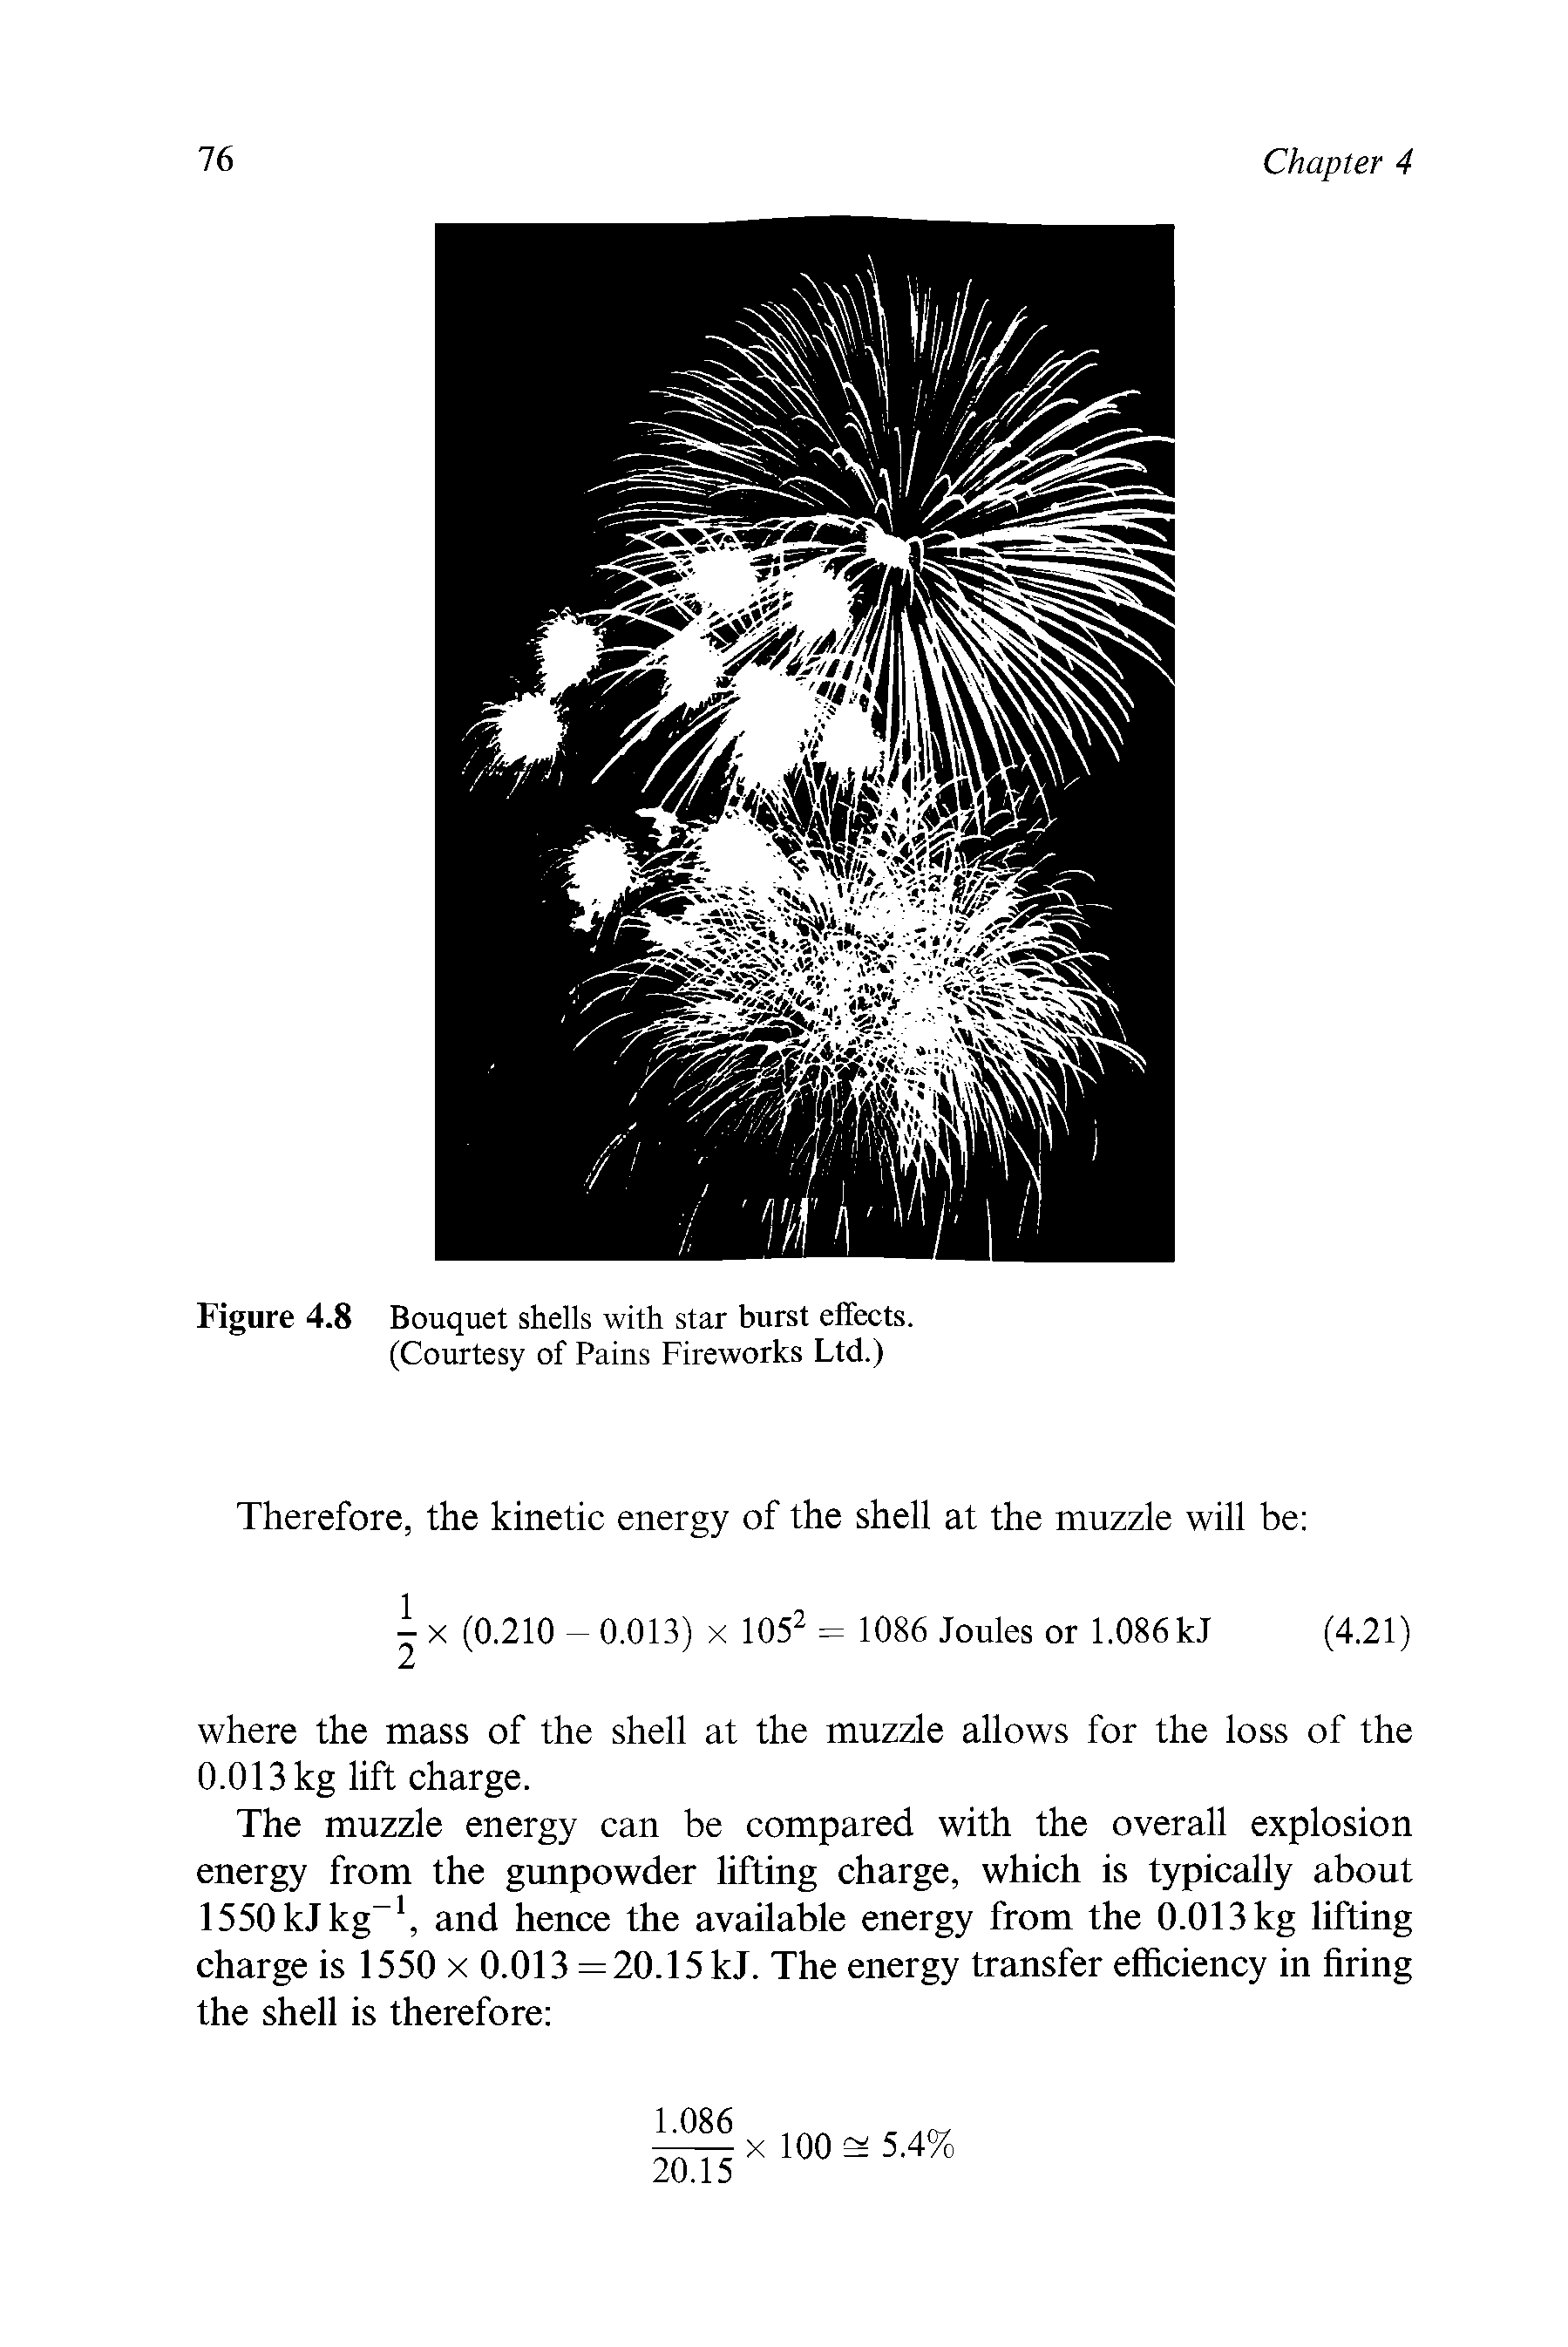 Figure 4.8 Bouquet shells with star burst eflfects.